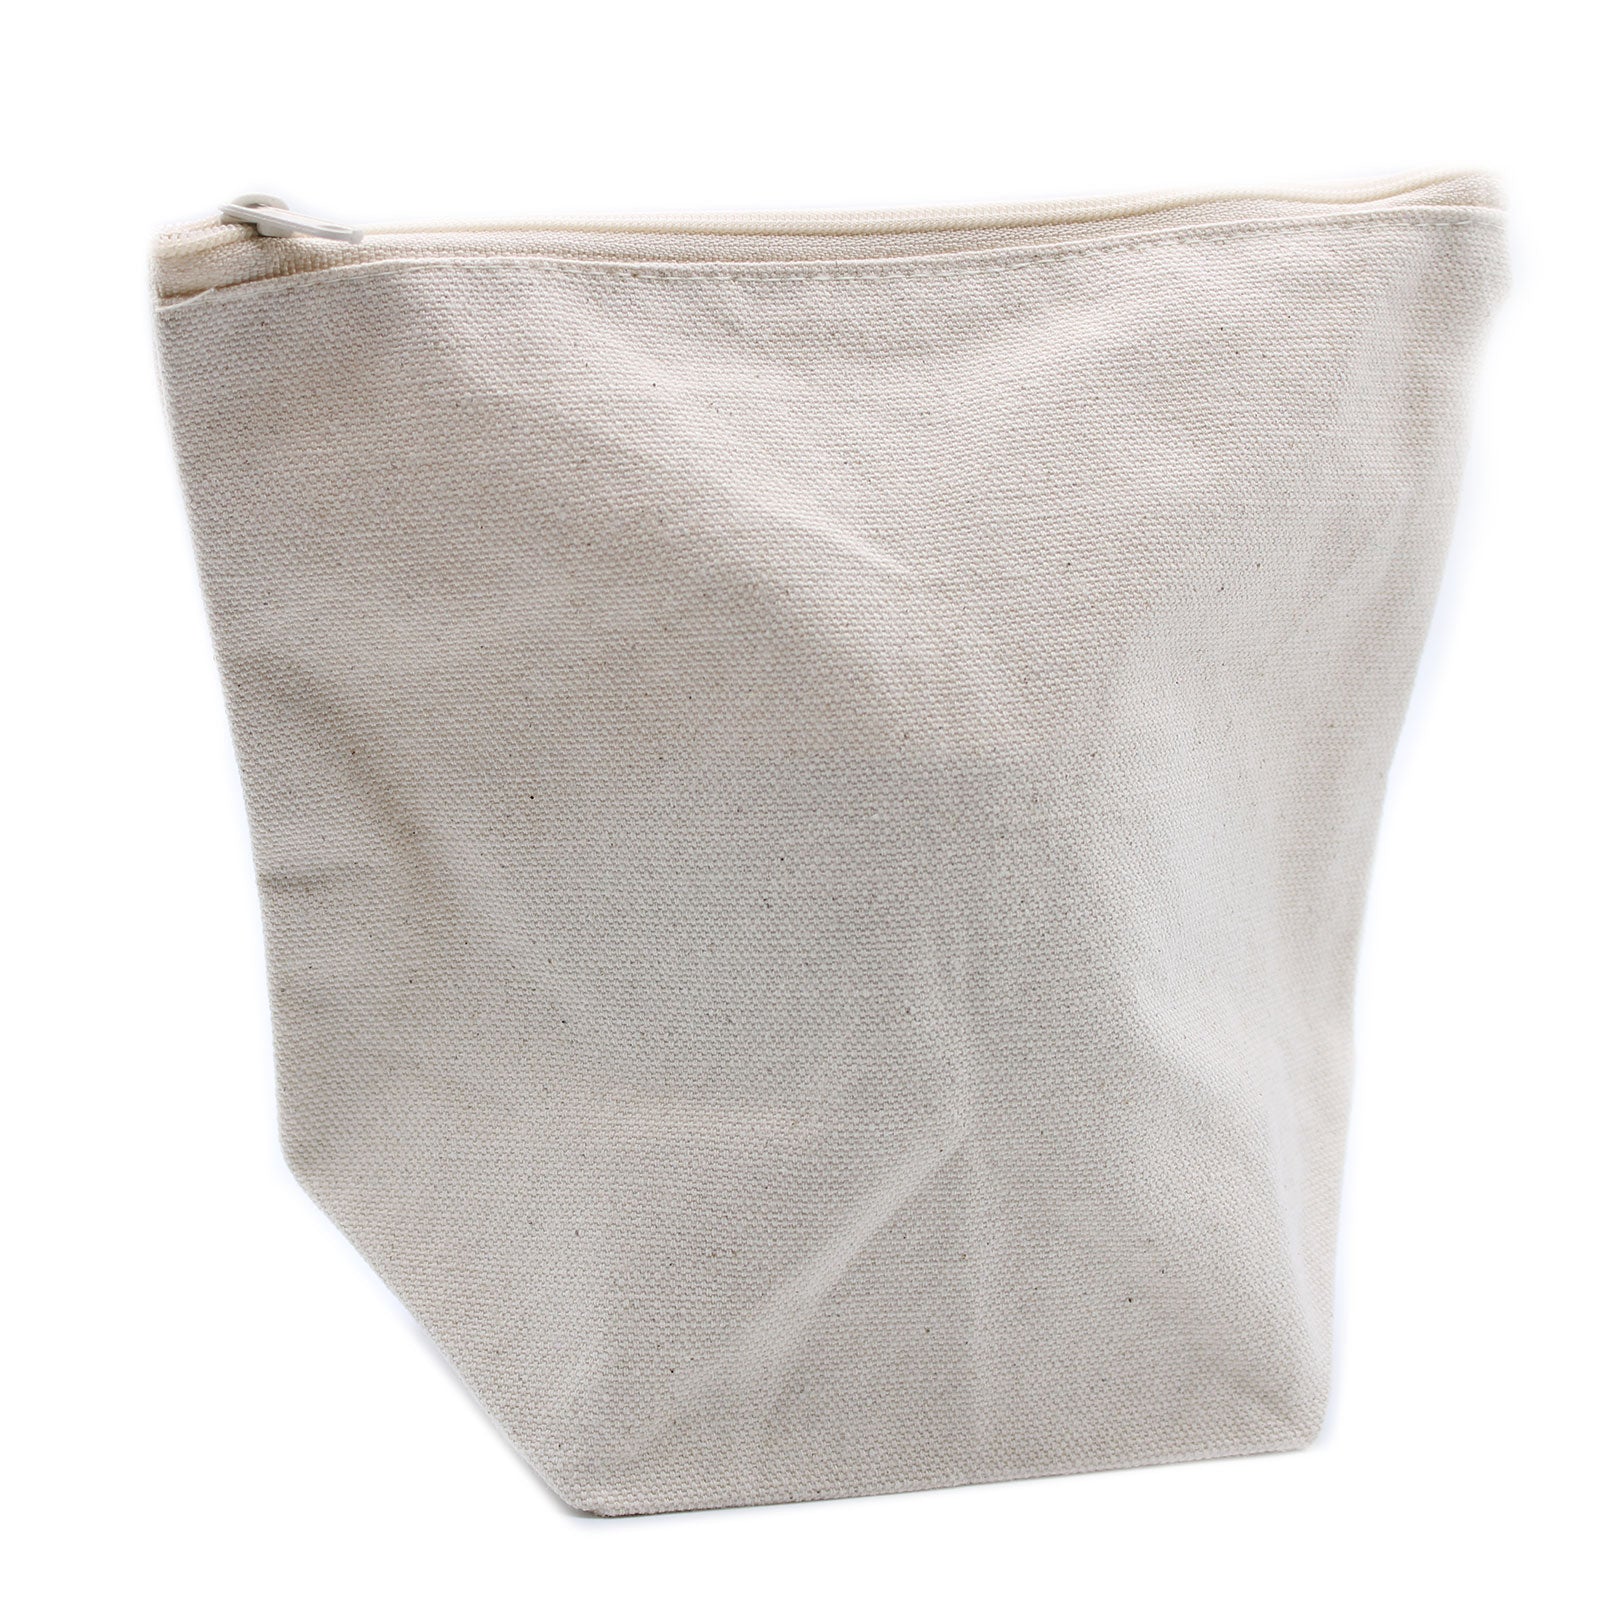 natural cotton bag, toiletry bag